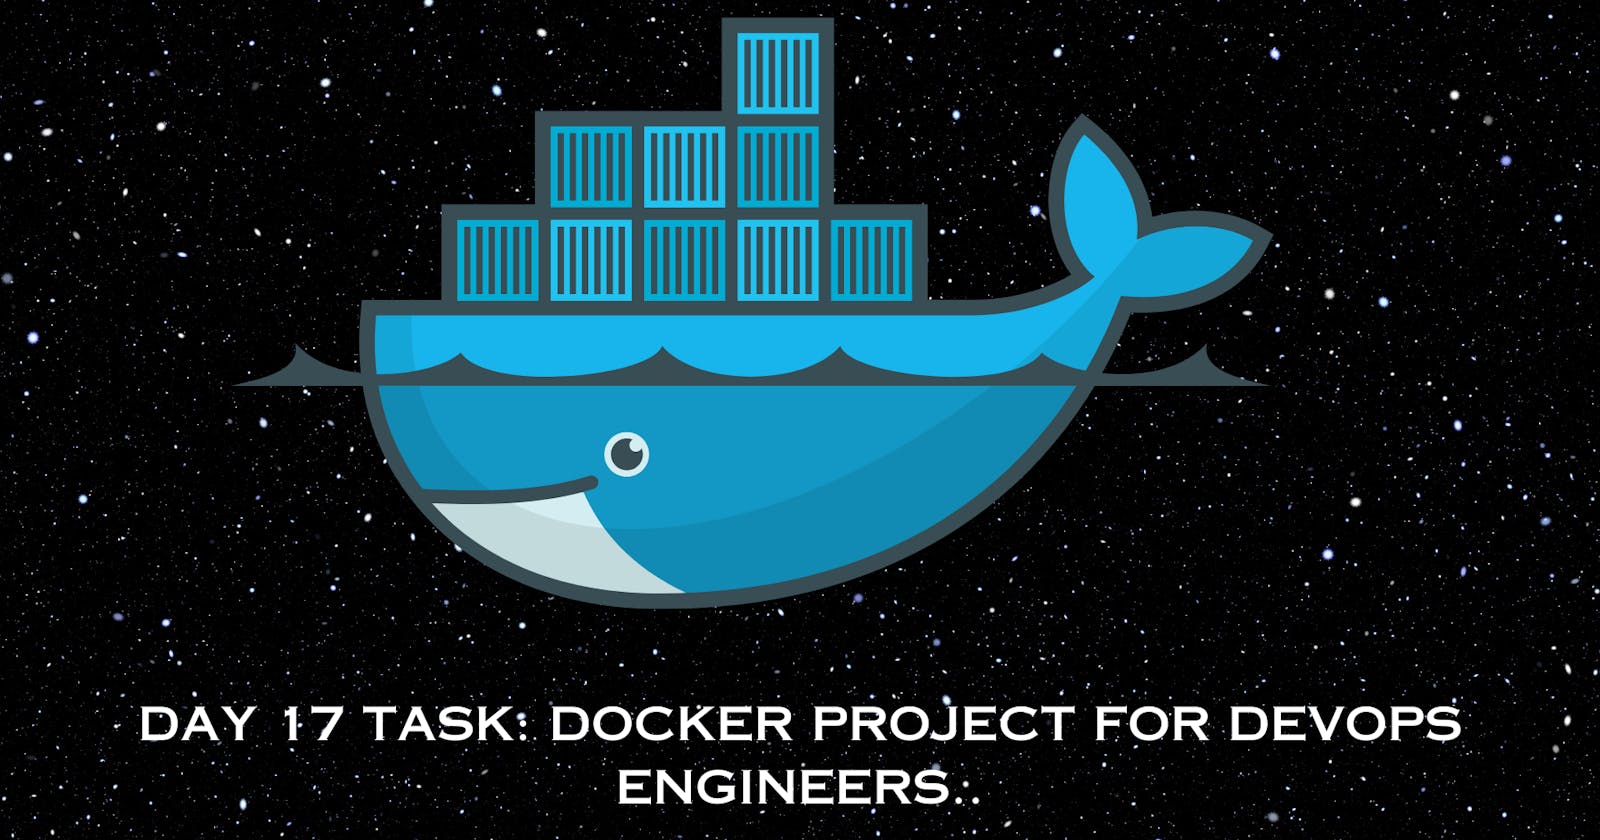 Day 17 Task: Docker Project for DevOps Engineers.